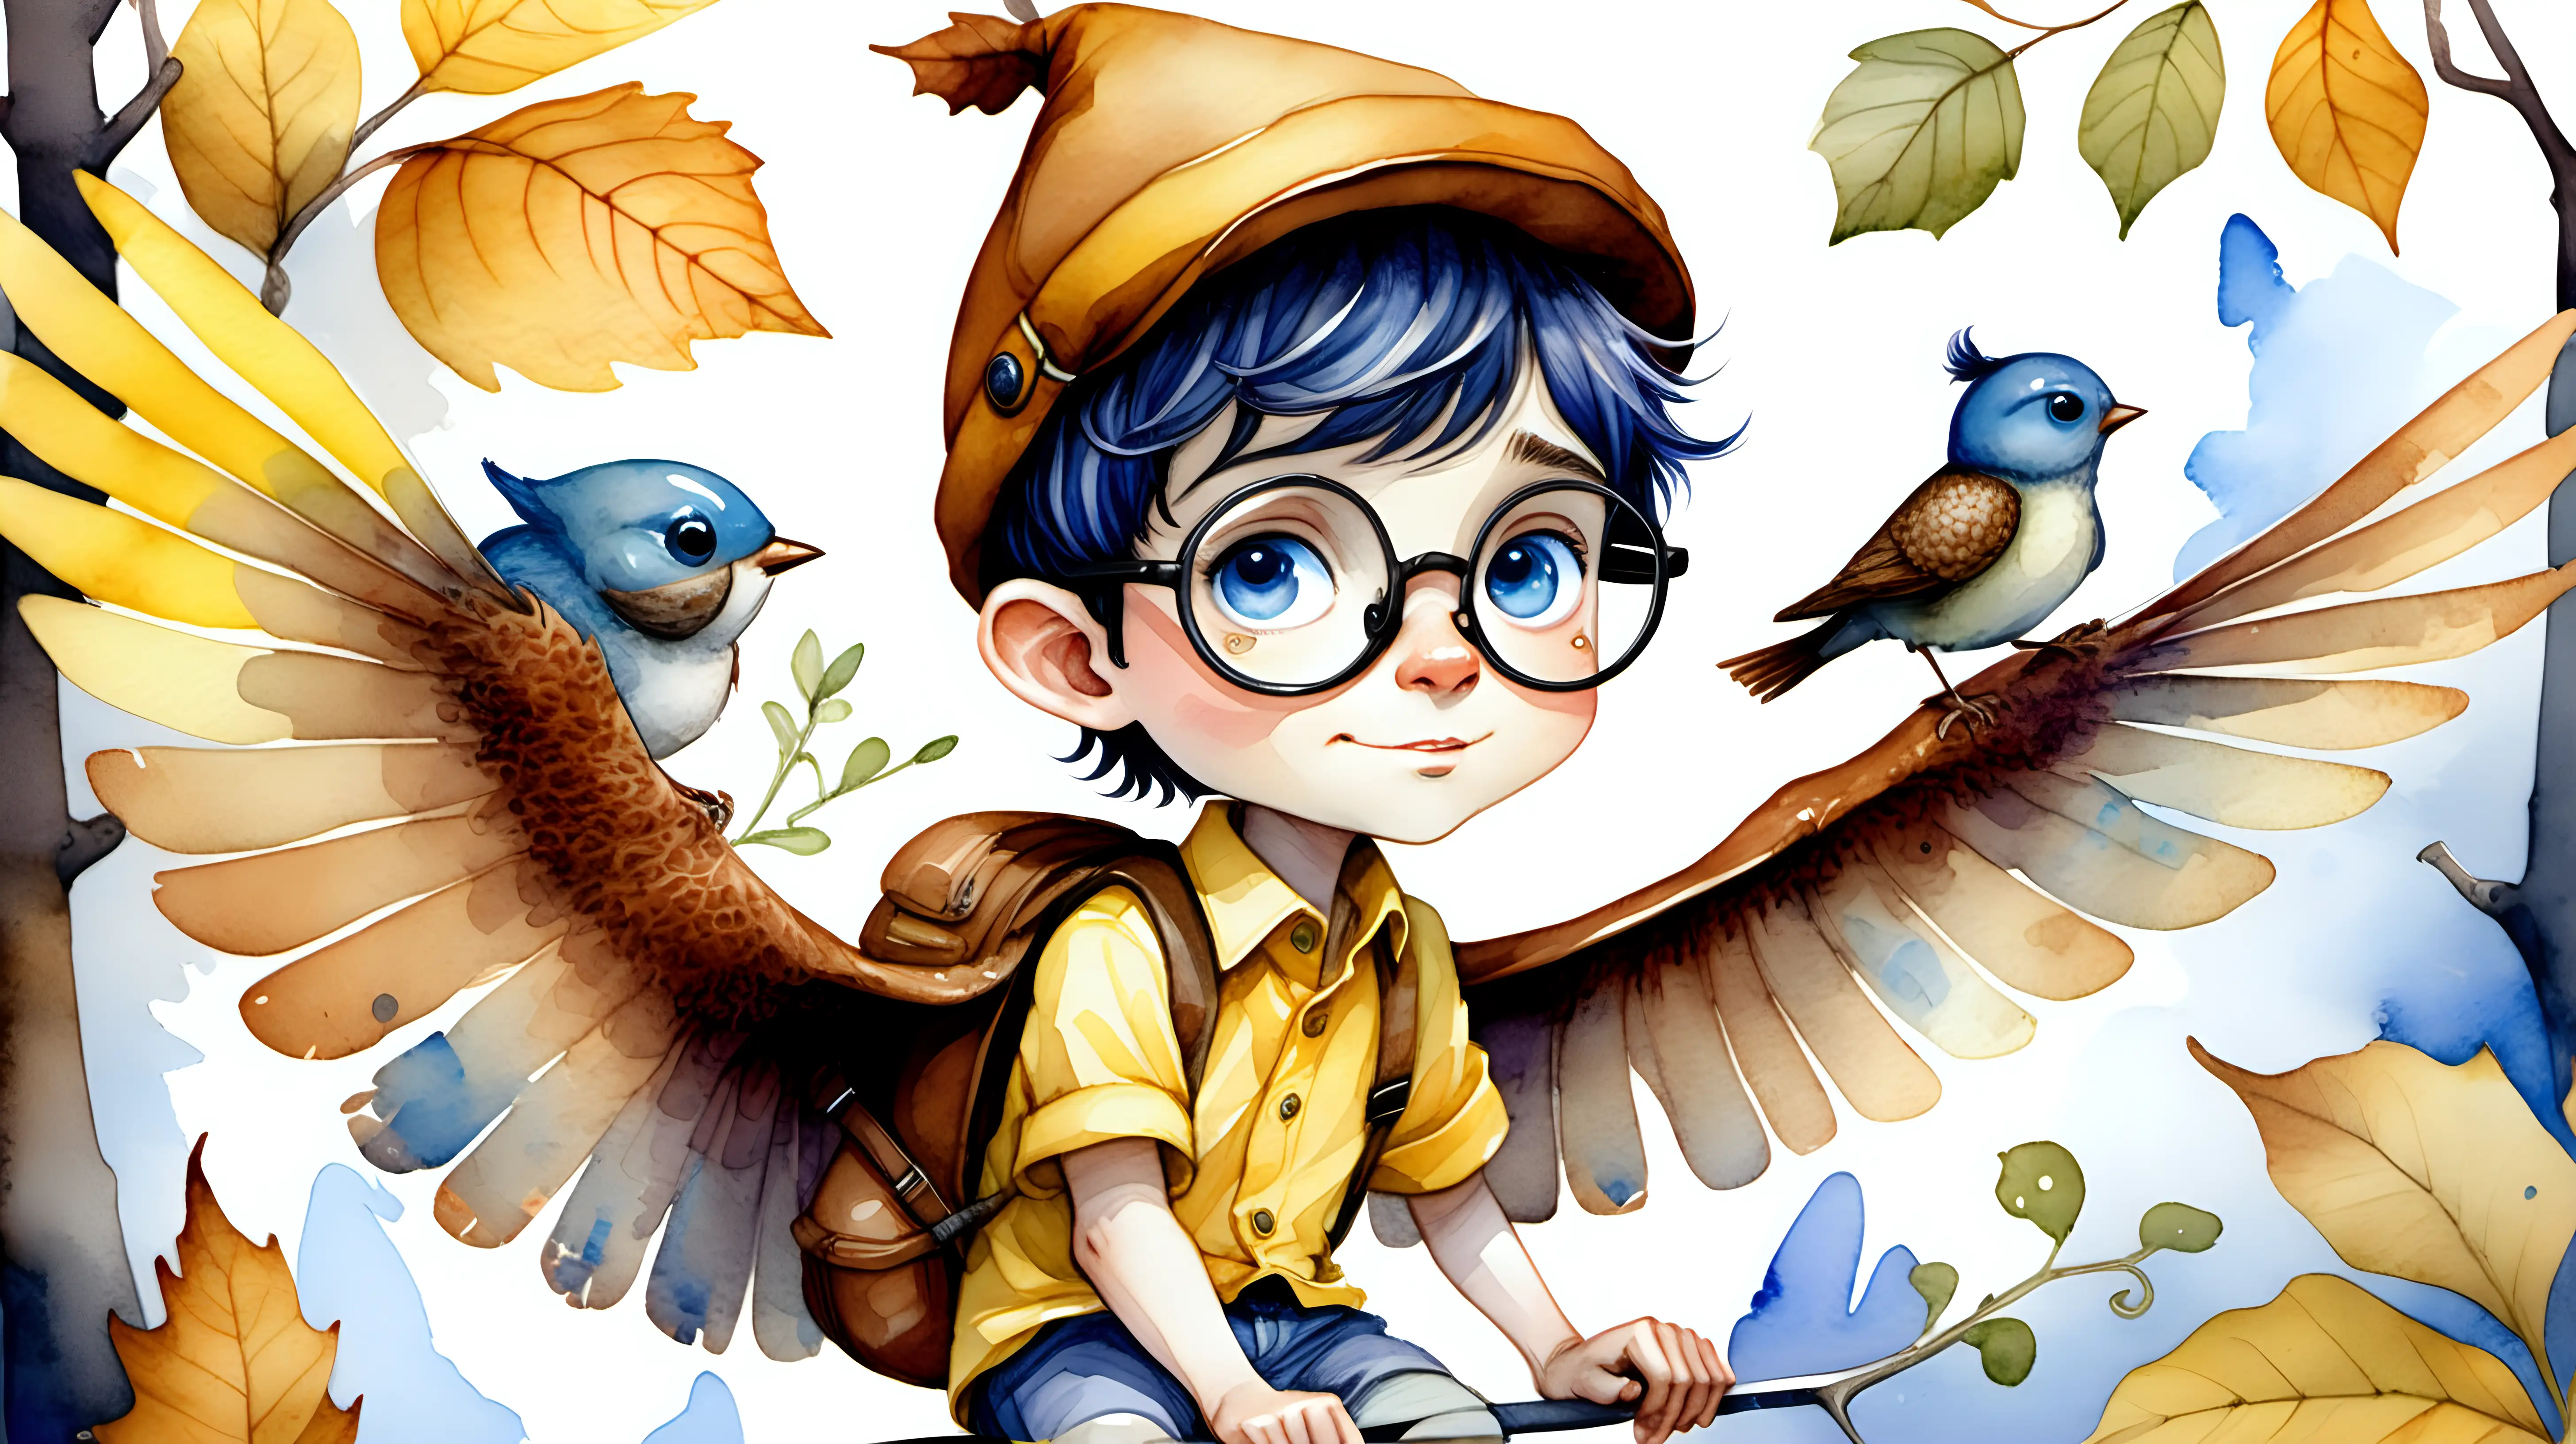 Enchanting Watercolor Fairytale Blueeyed Boy Pixie Riding on a Bird